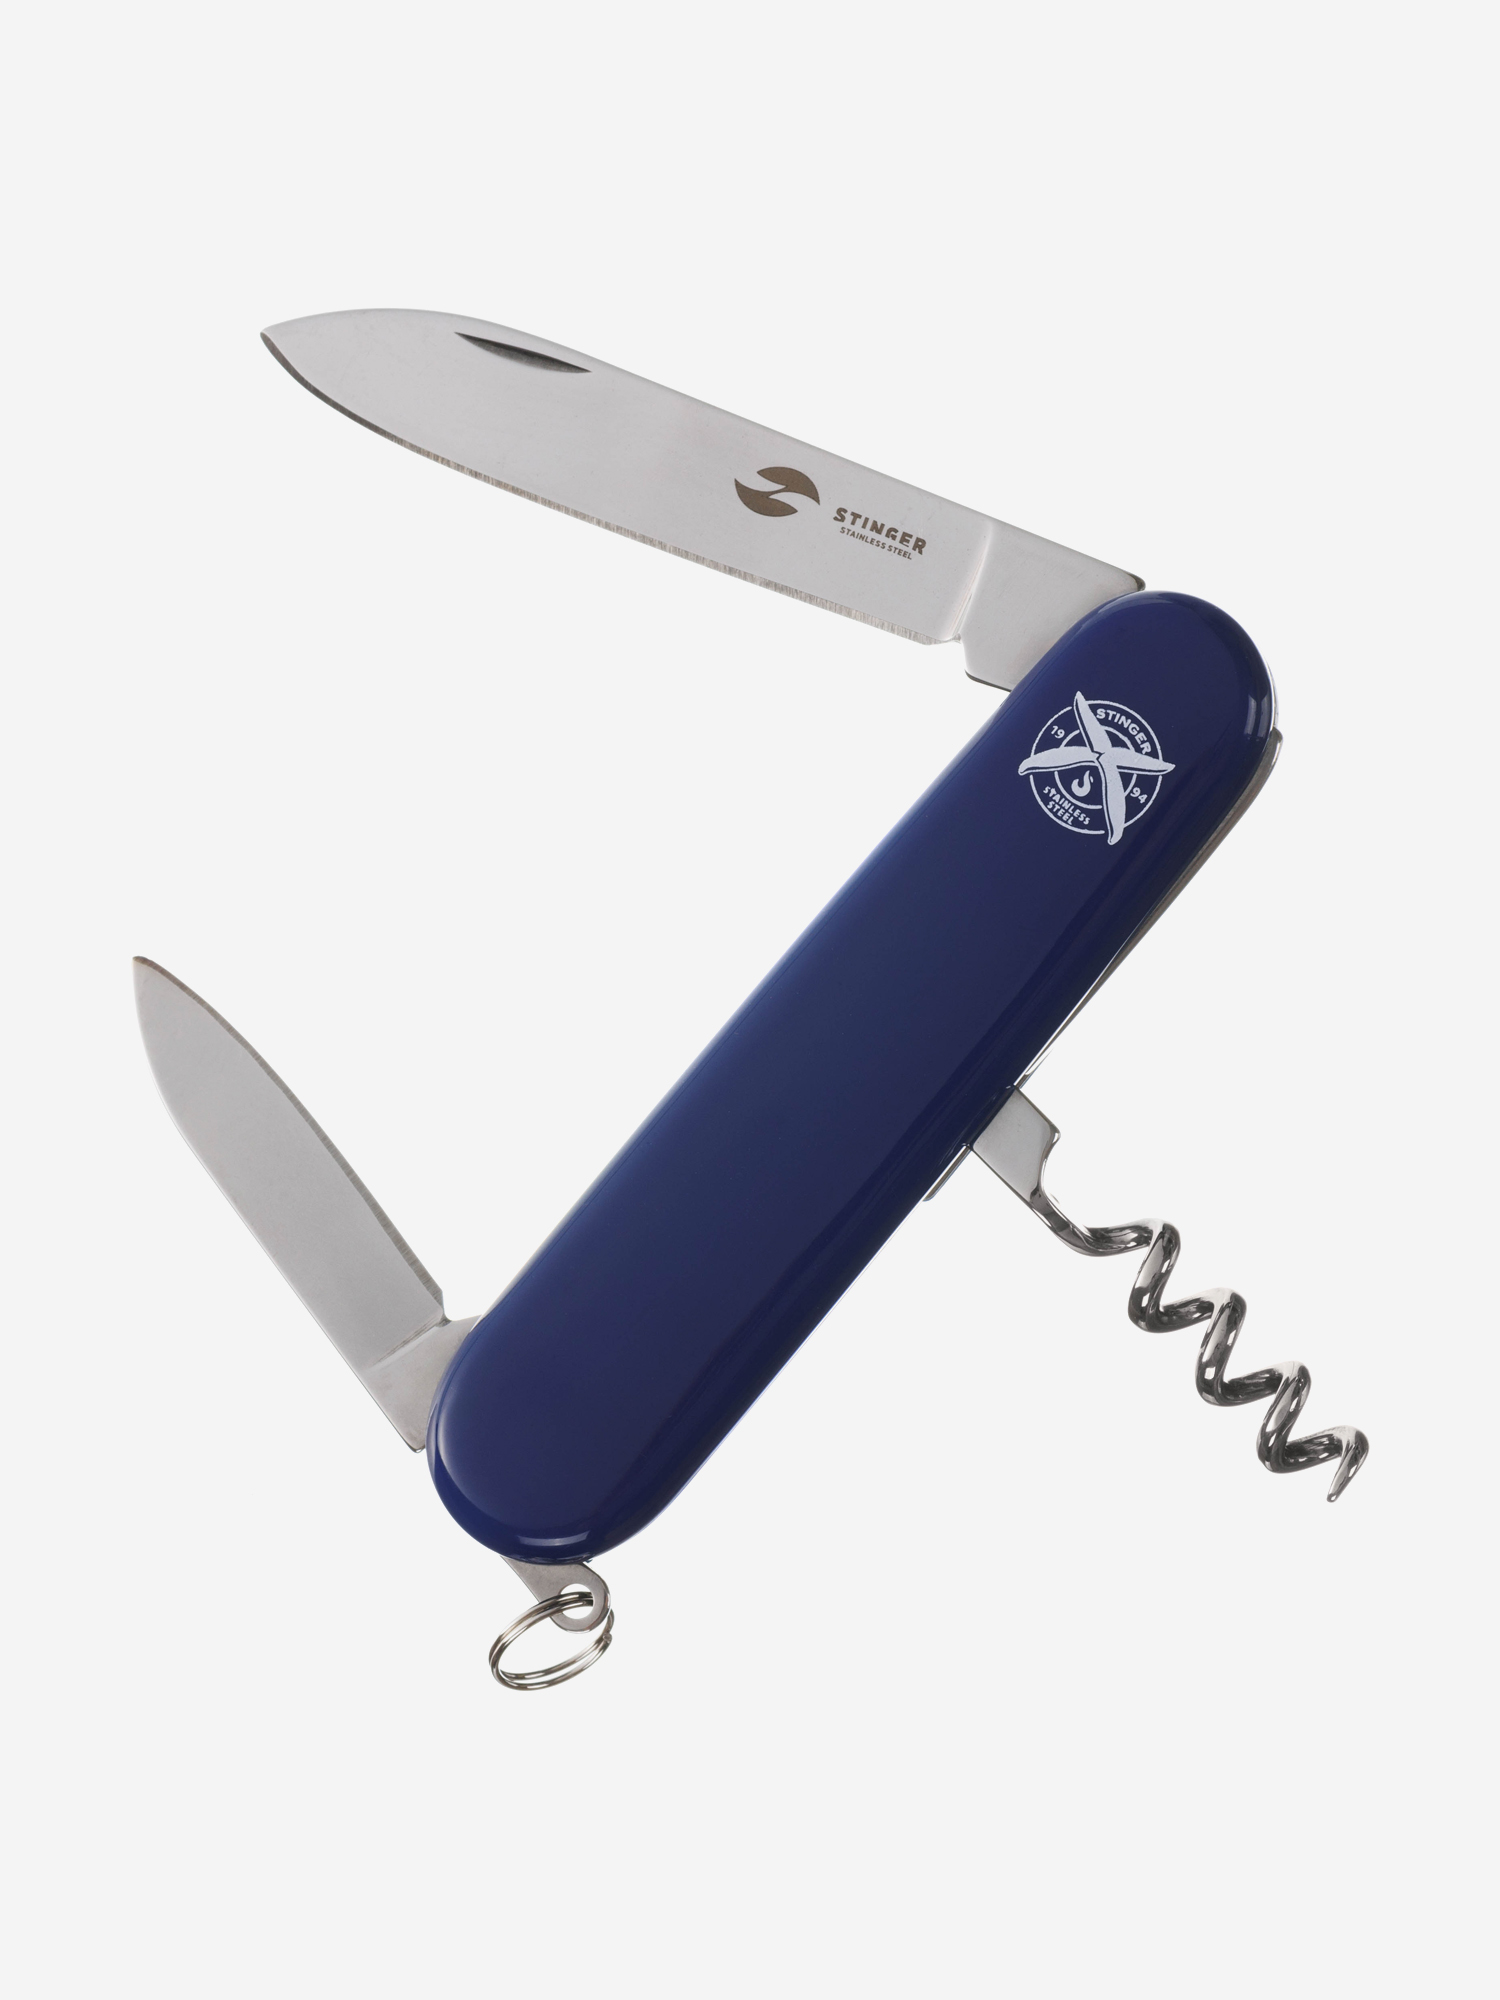 Нож перочинный Stinger, 90 мм, 4 функции, материал рукояти: АБС-пластик (синий), Синий нож перочинный stinger 90 мм 2 функции материал рукояти абс пластик синий синий